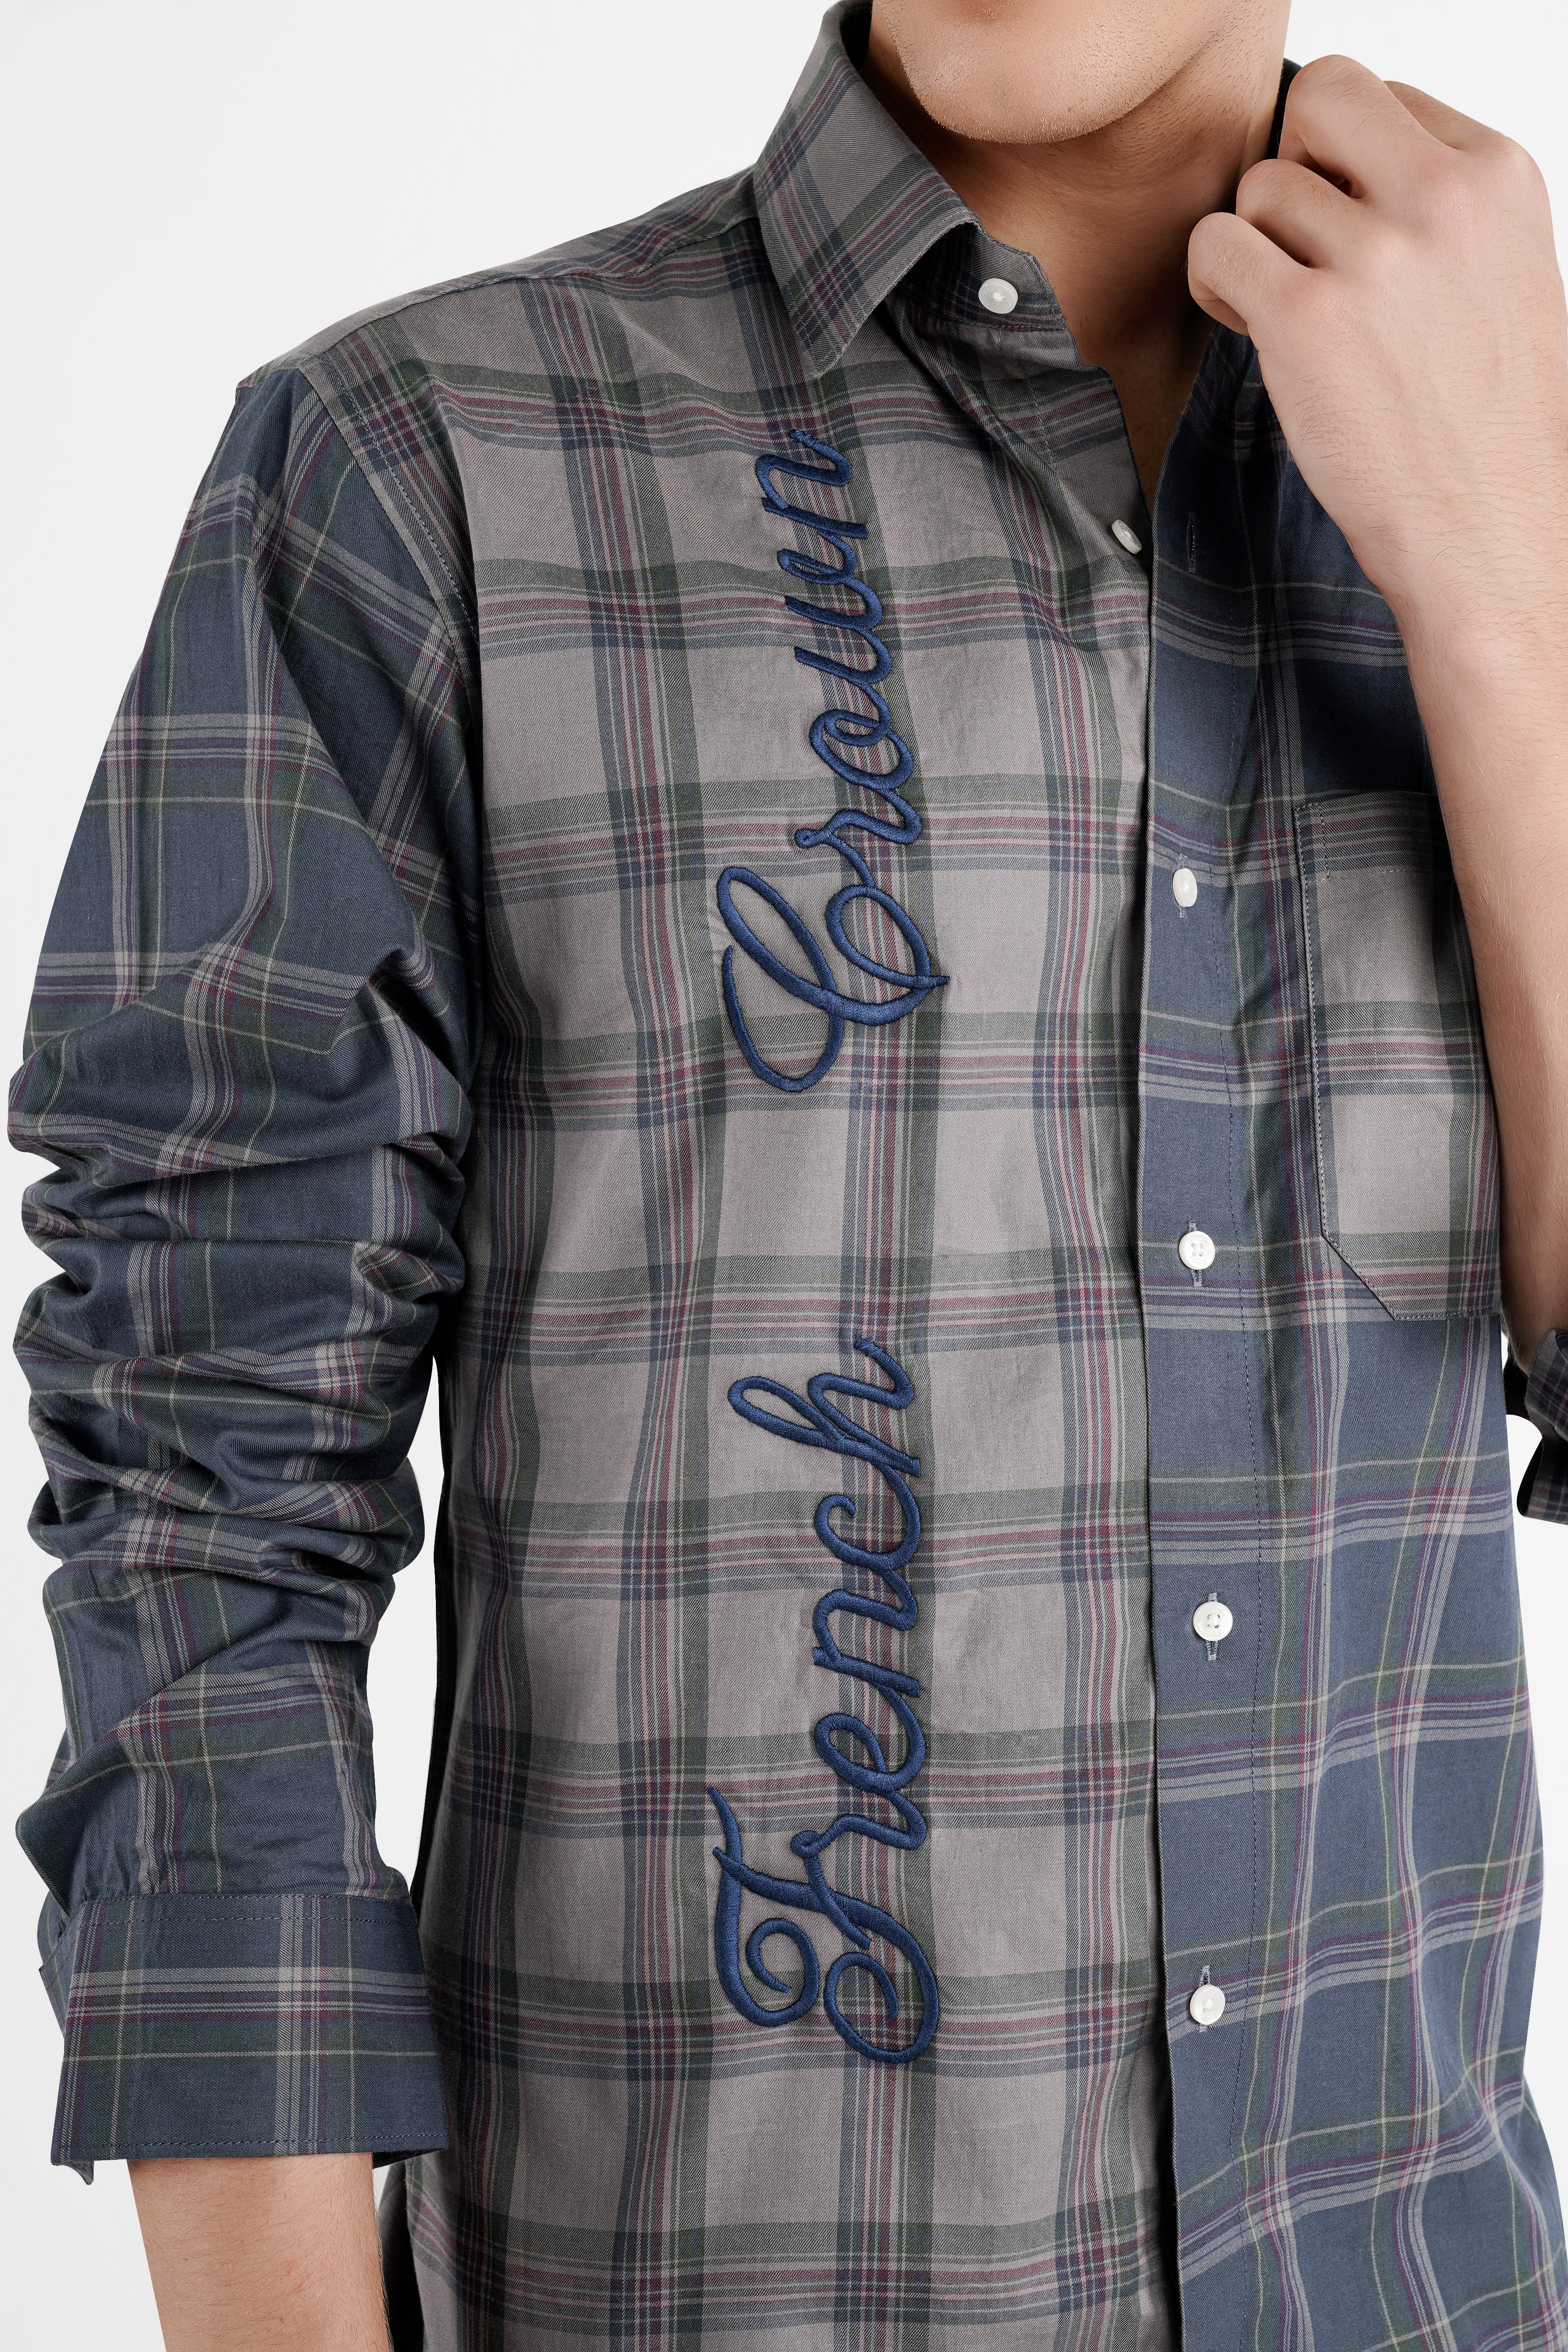 Venus Brown with Cadet Blue Checkered Premium Cotton Embroidered Designer Signature Shirt